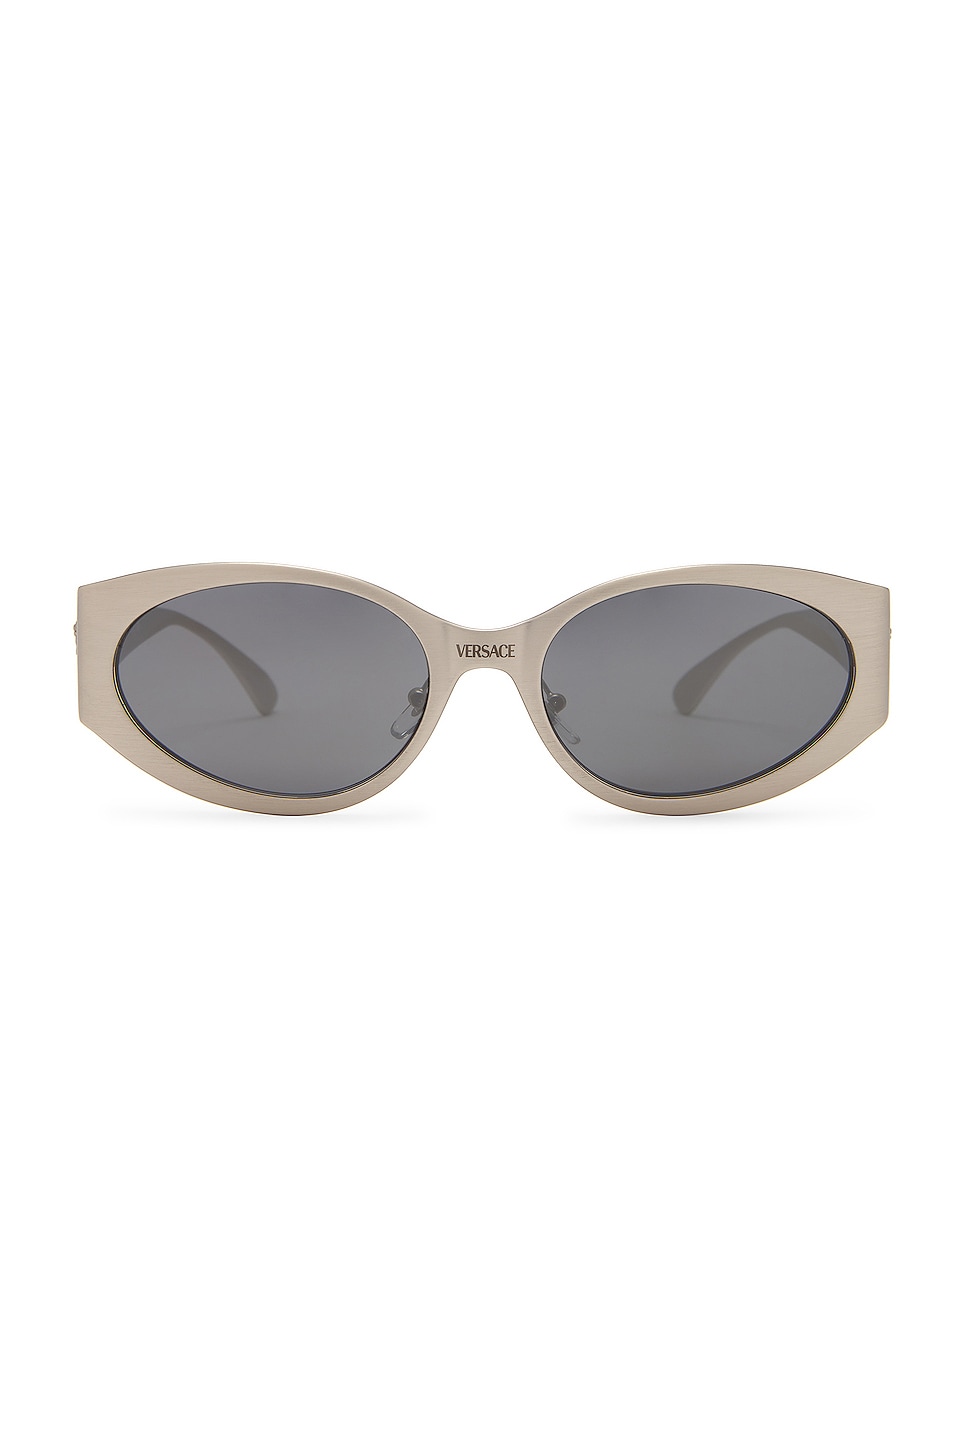 VERSACE Oval Sunglasses in Metallic Silver